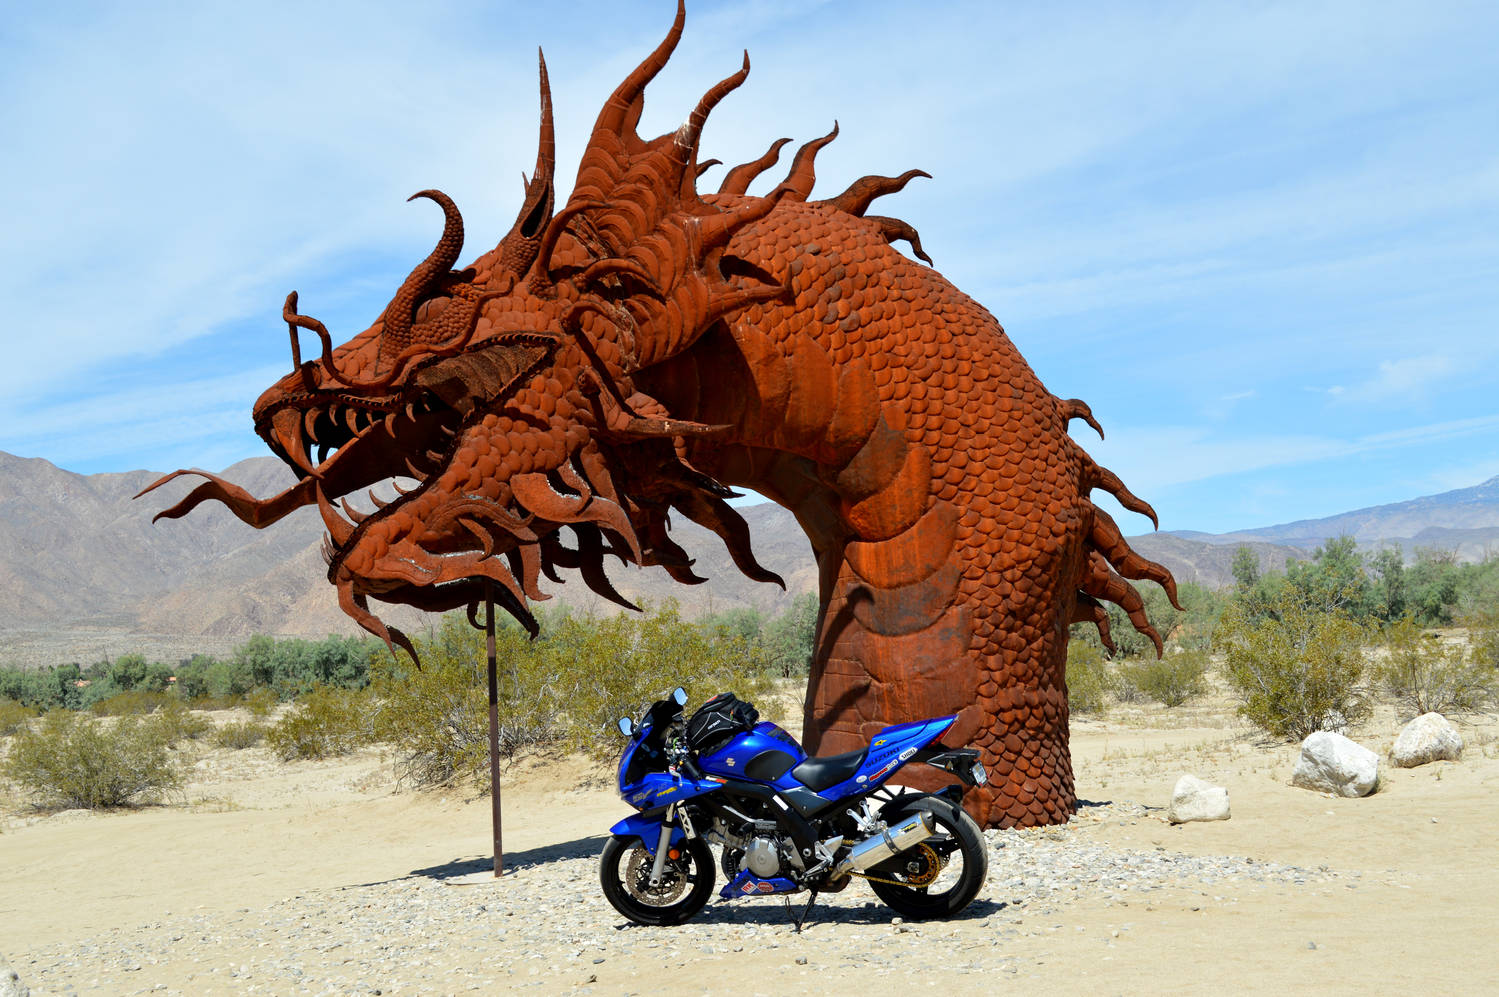 Not riding the Dragon